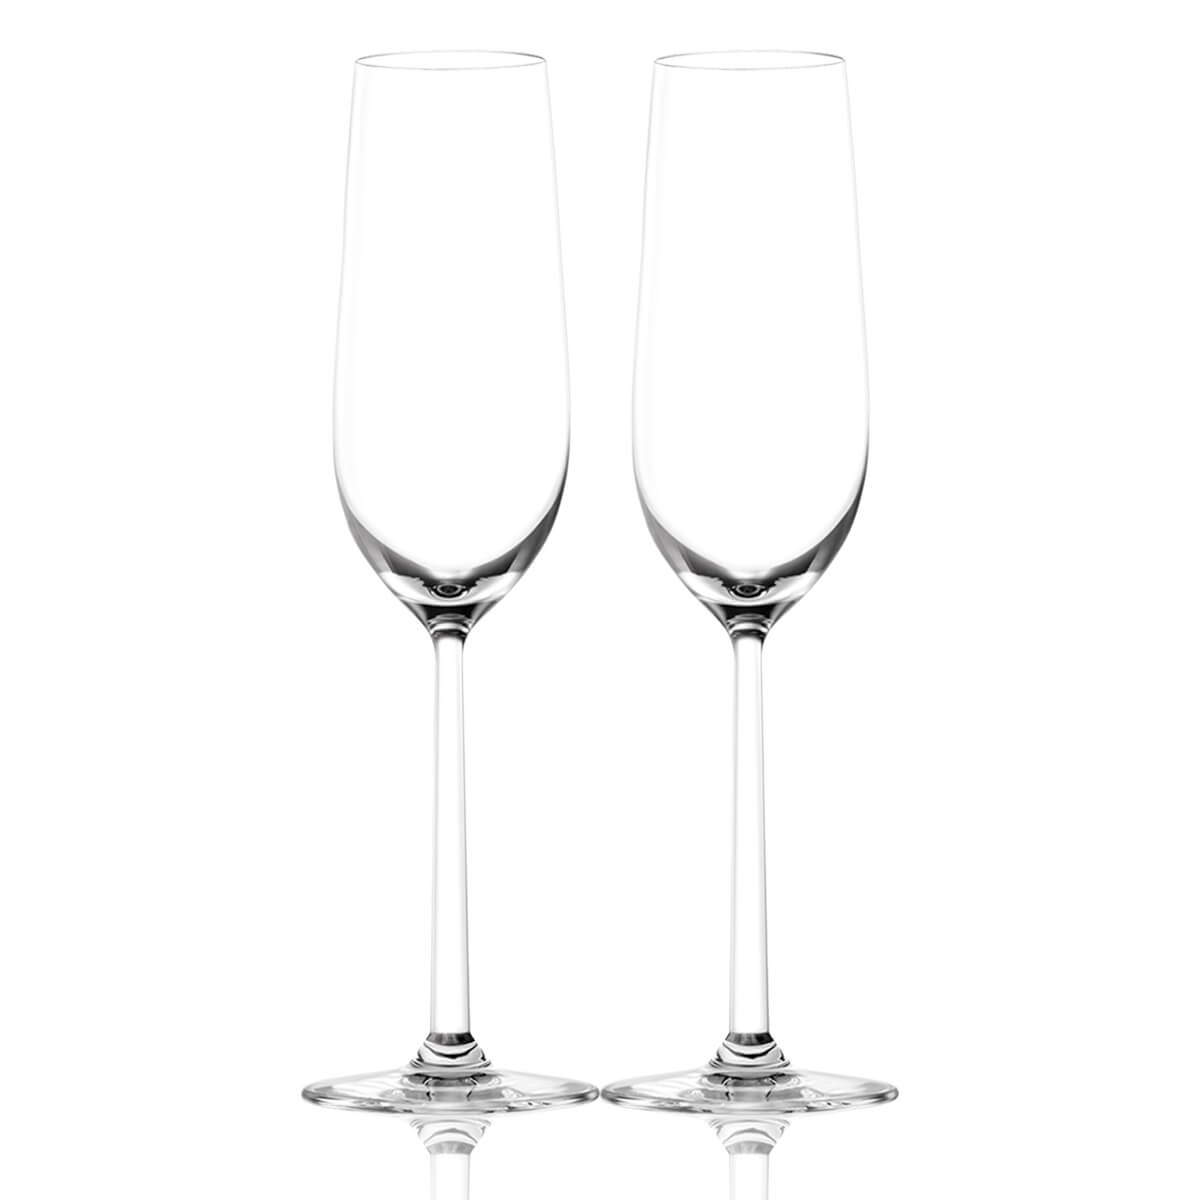 Ruinart Rosé & Bottega Champagne Glasses Gift Set with Engraving |瑞納特玫瑰香檳&Bottega香檳杯套裝(含名字人像雕刻） - Design Your Own Wine